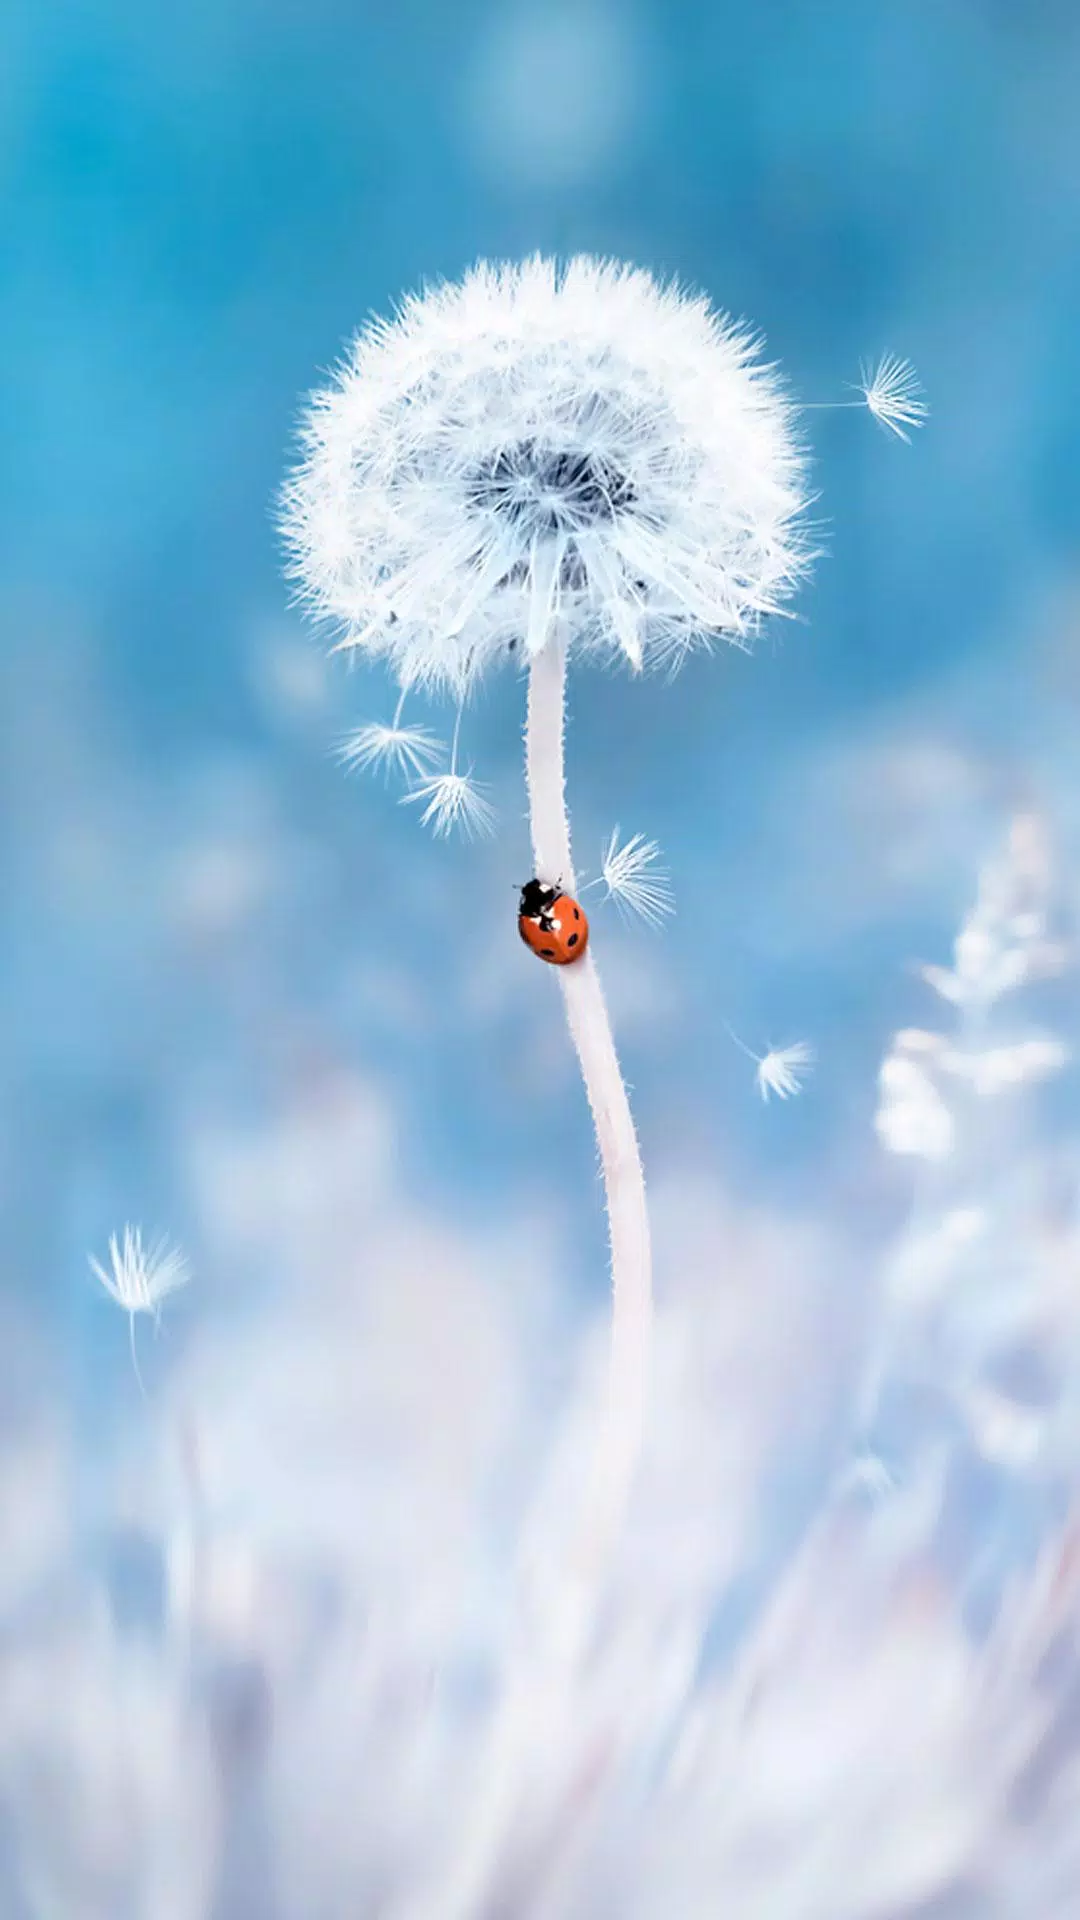 A ladybug on a dandelion, in front of a blue sky - Dandelions